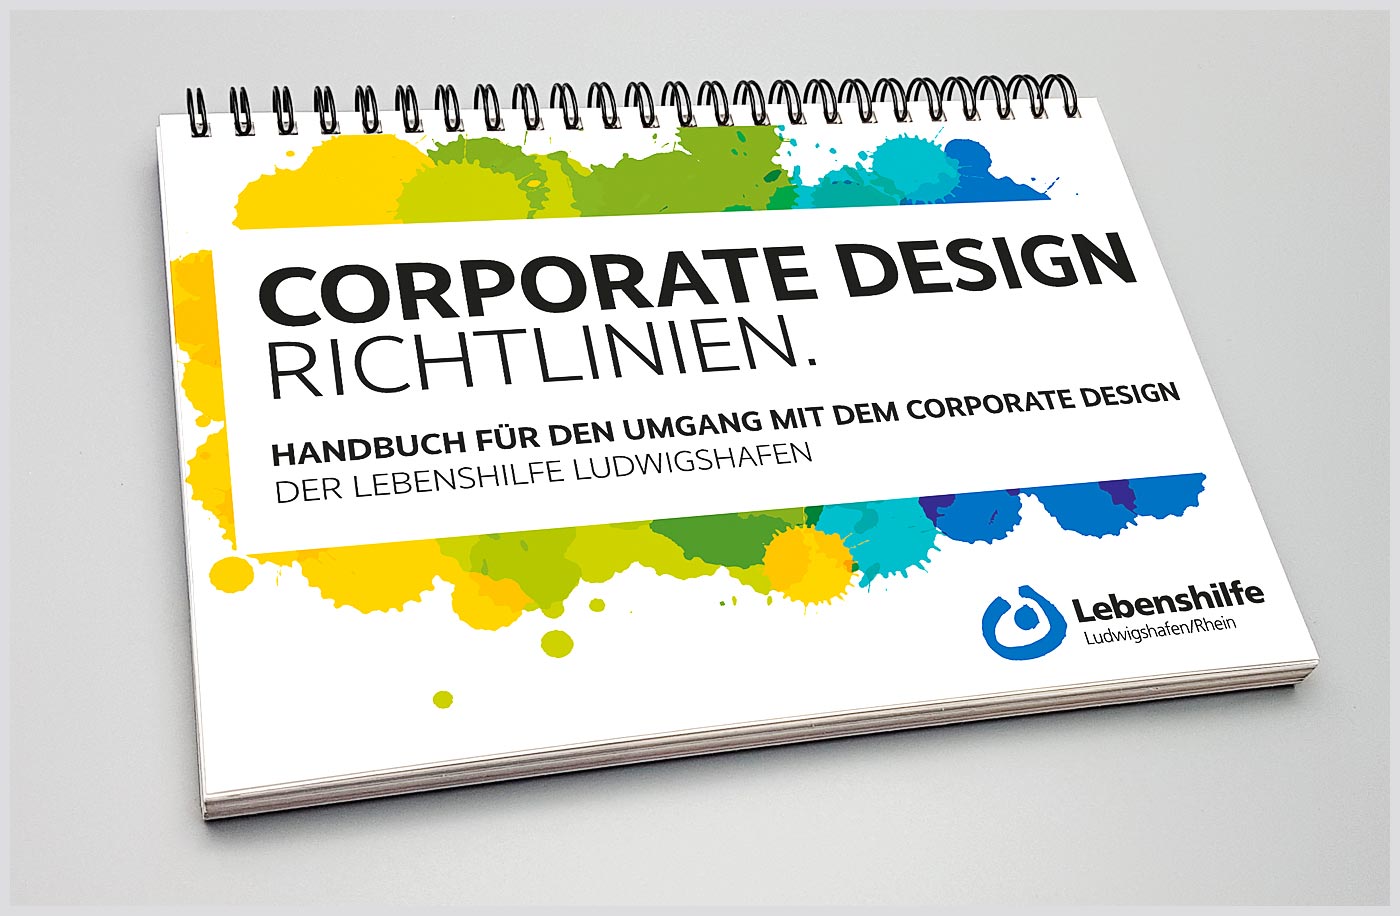 Foto des Corporate Design Manuals